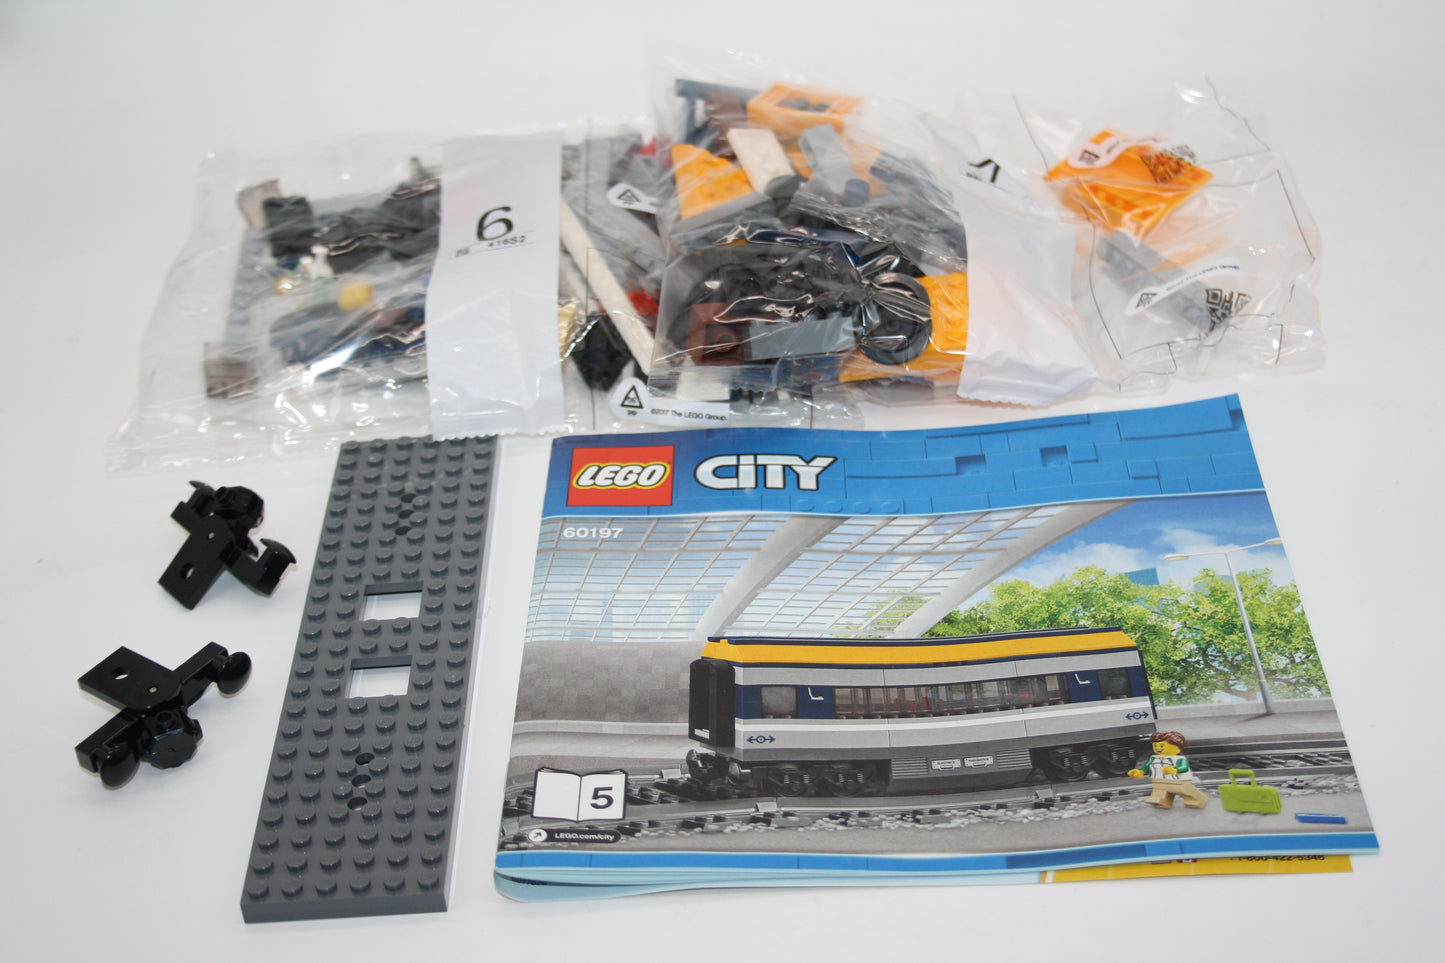 LEGO® City/Eisenbahn - Personenwagen aus 60197 - Waggon/Wagon - inkl. BA (Nr.5) - neu/unbespielt